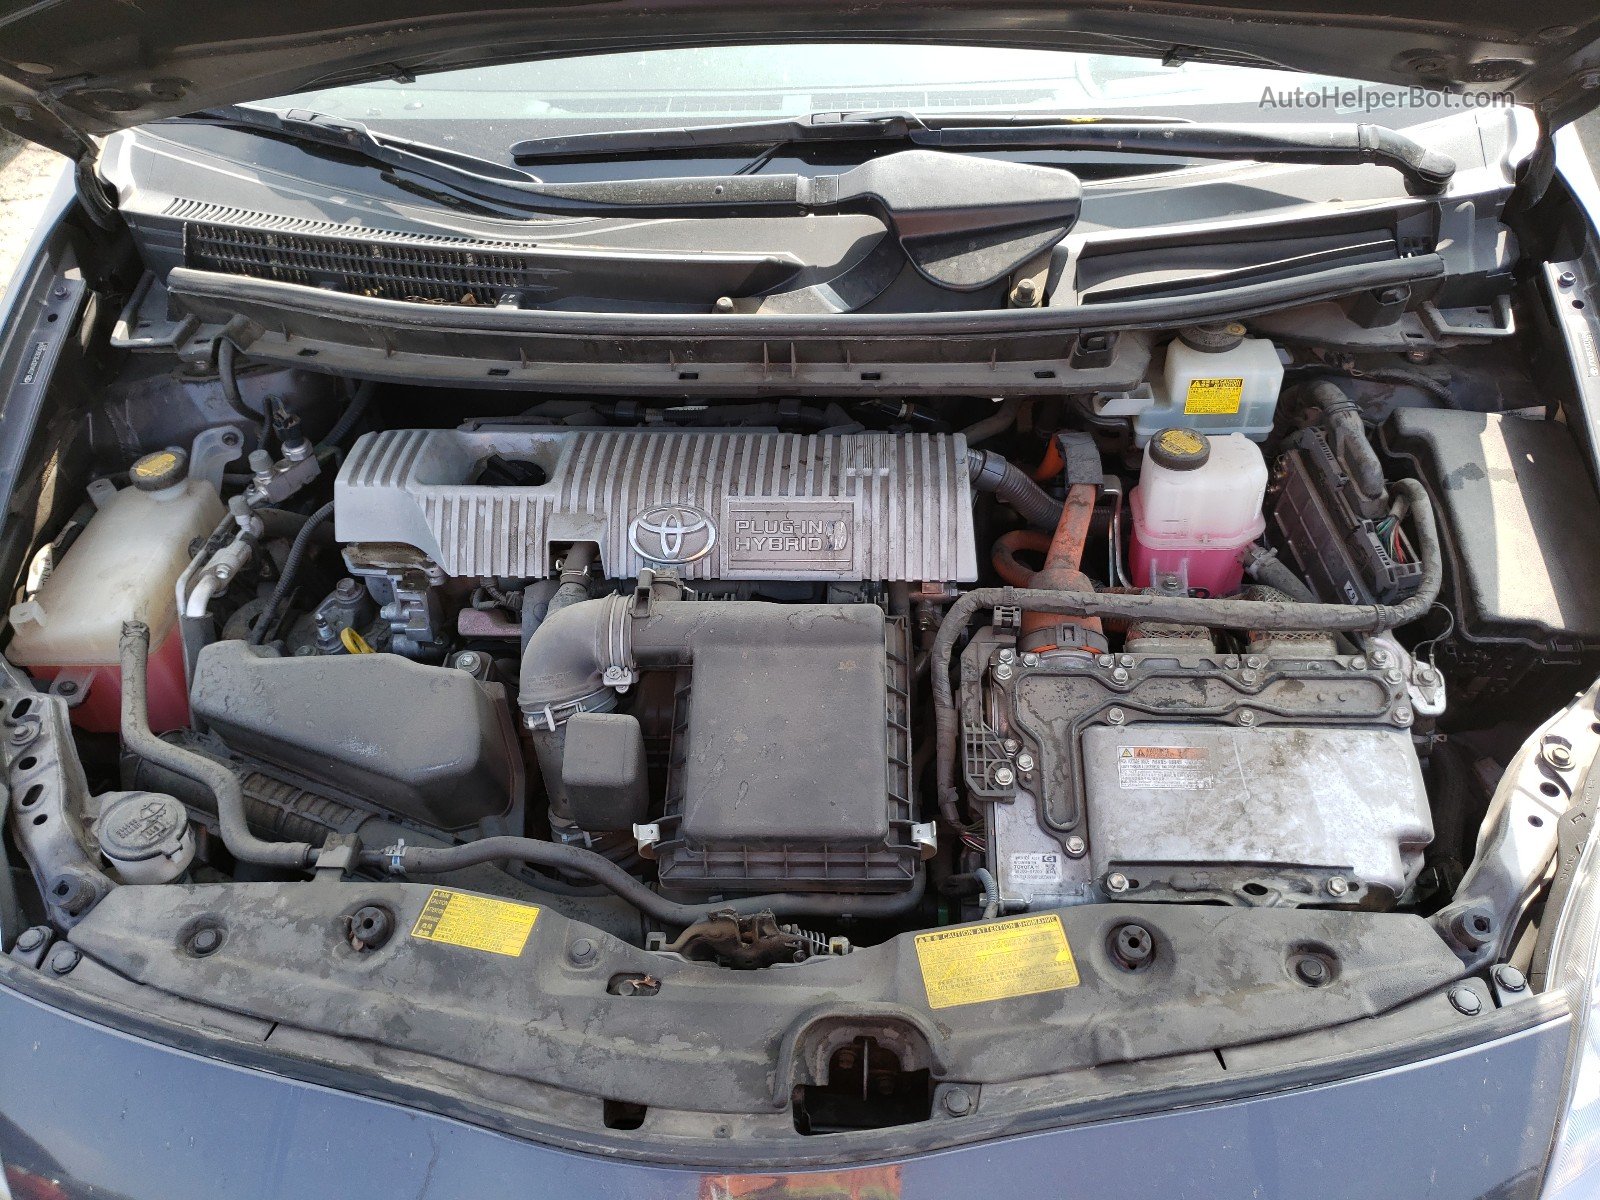 2012 Toyota Prius Plug-in Blue vin: JTDKN3DP3C3004369